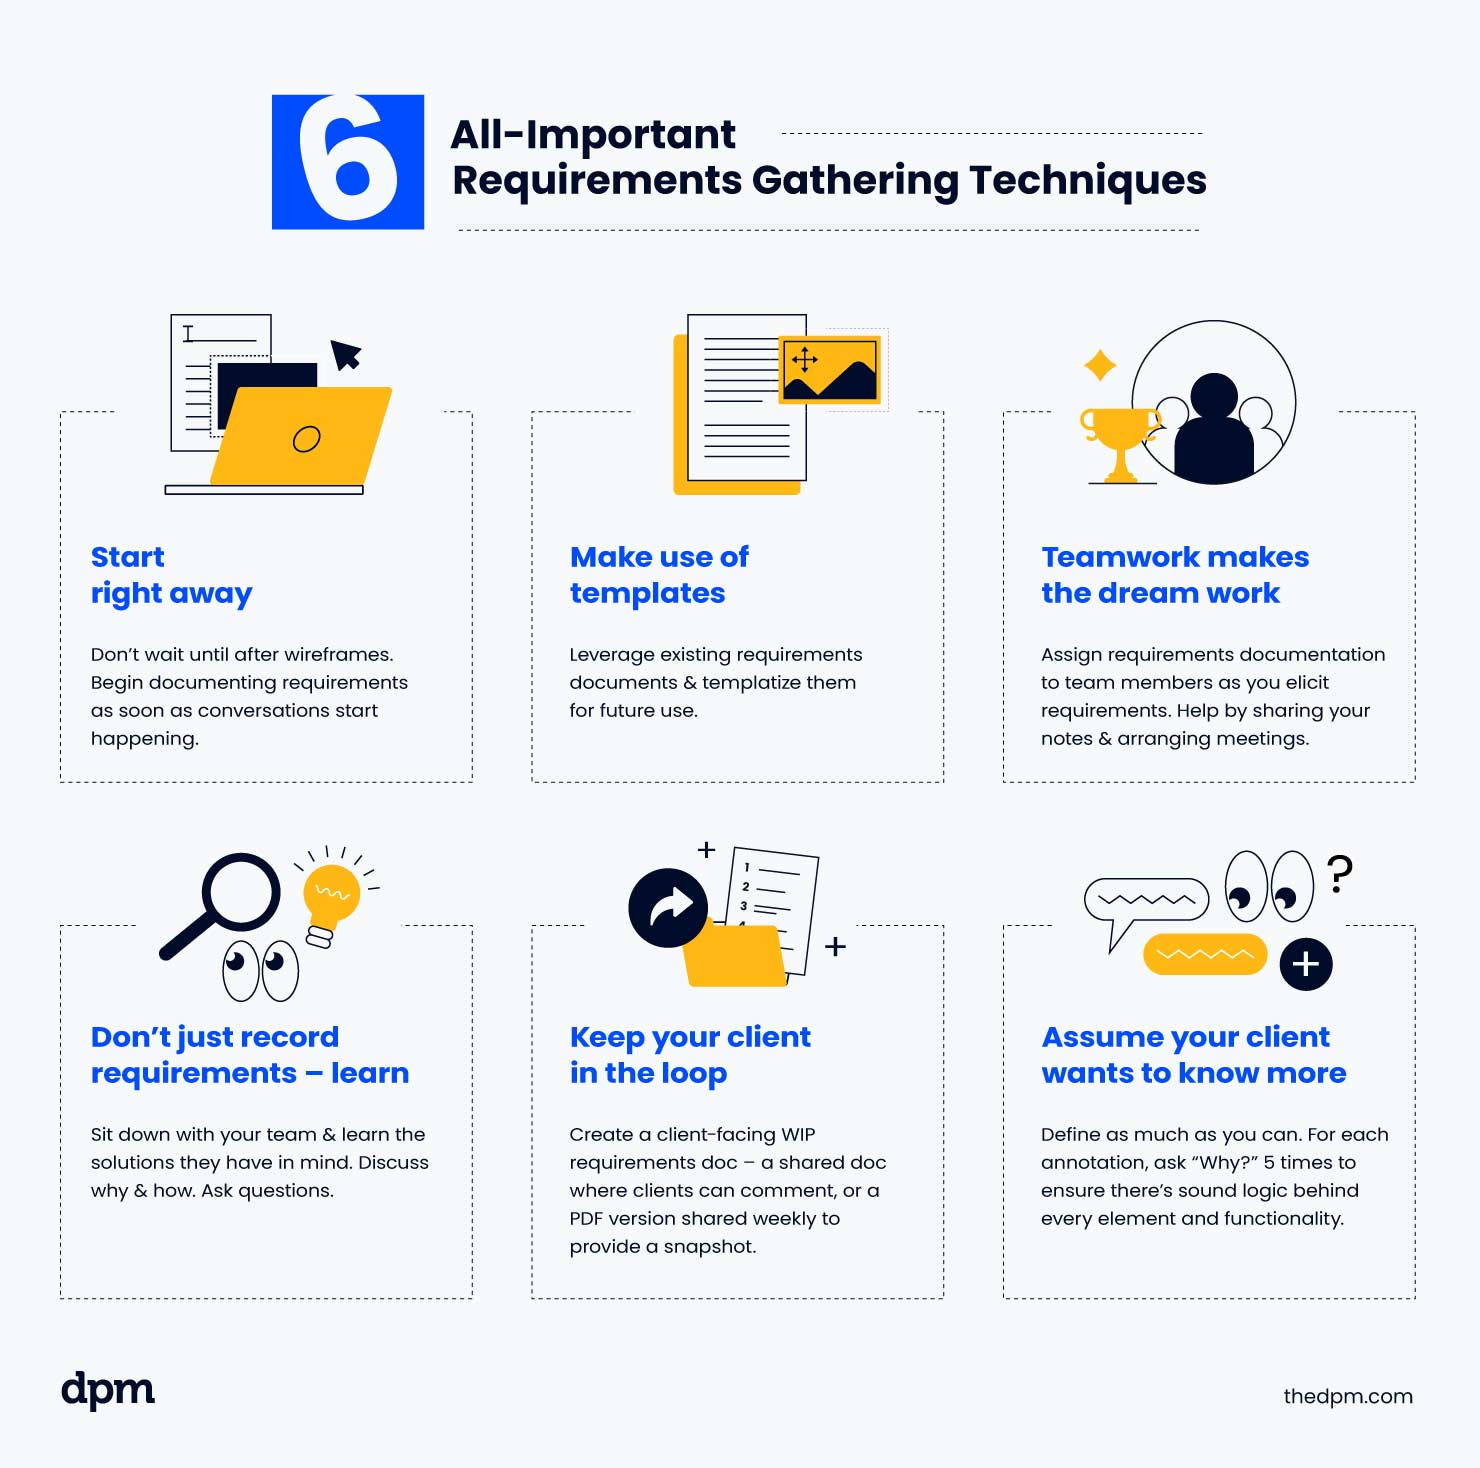 6 requirements gathering techniques